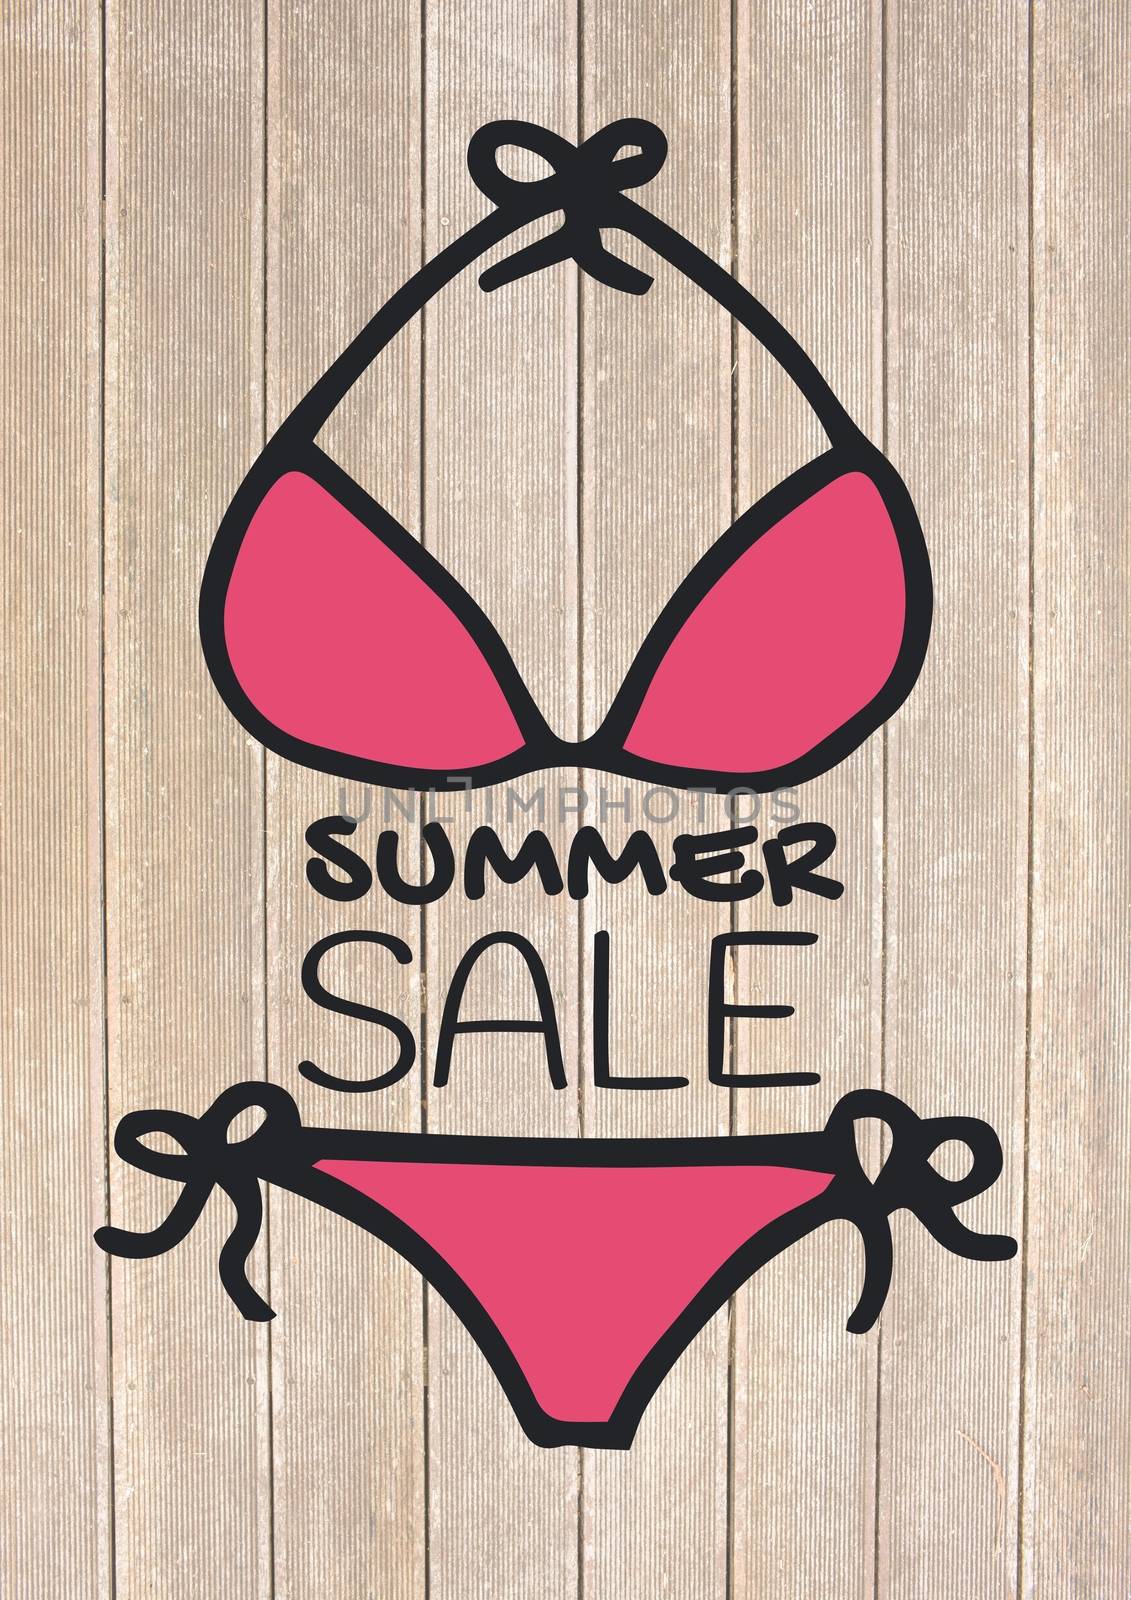 Summer sale text and pink bikini against decking by Wavebreakmedia